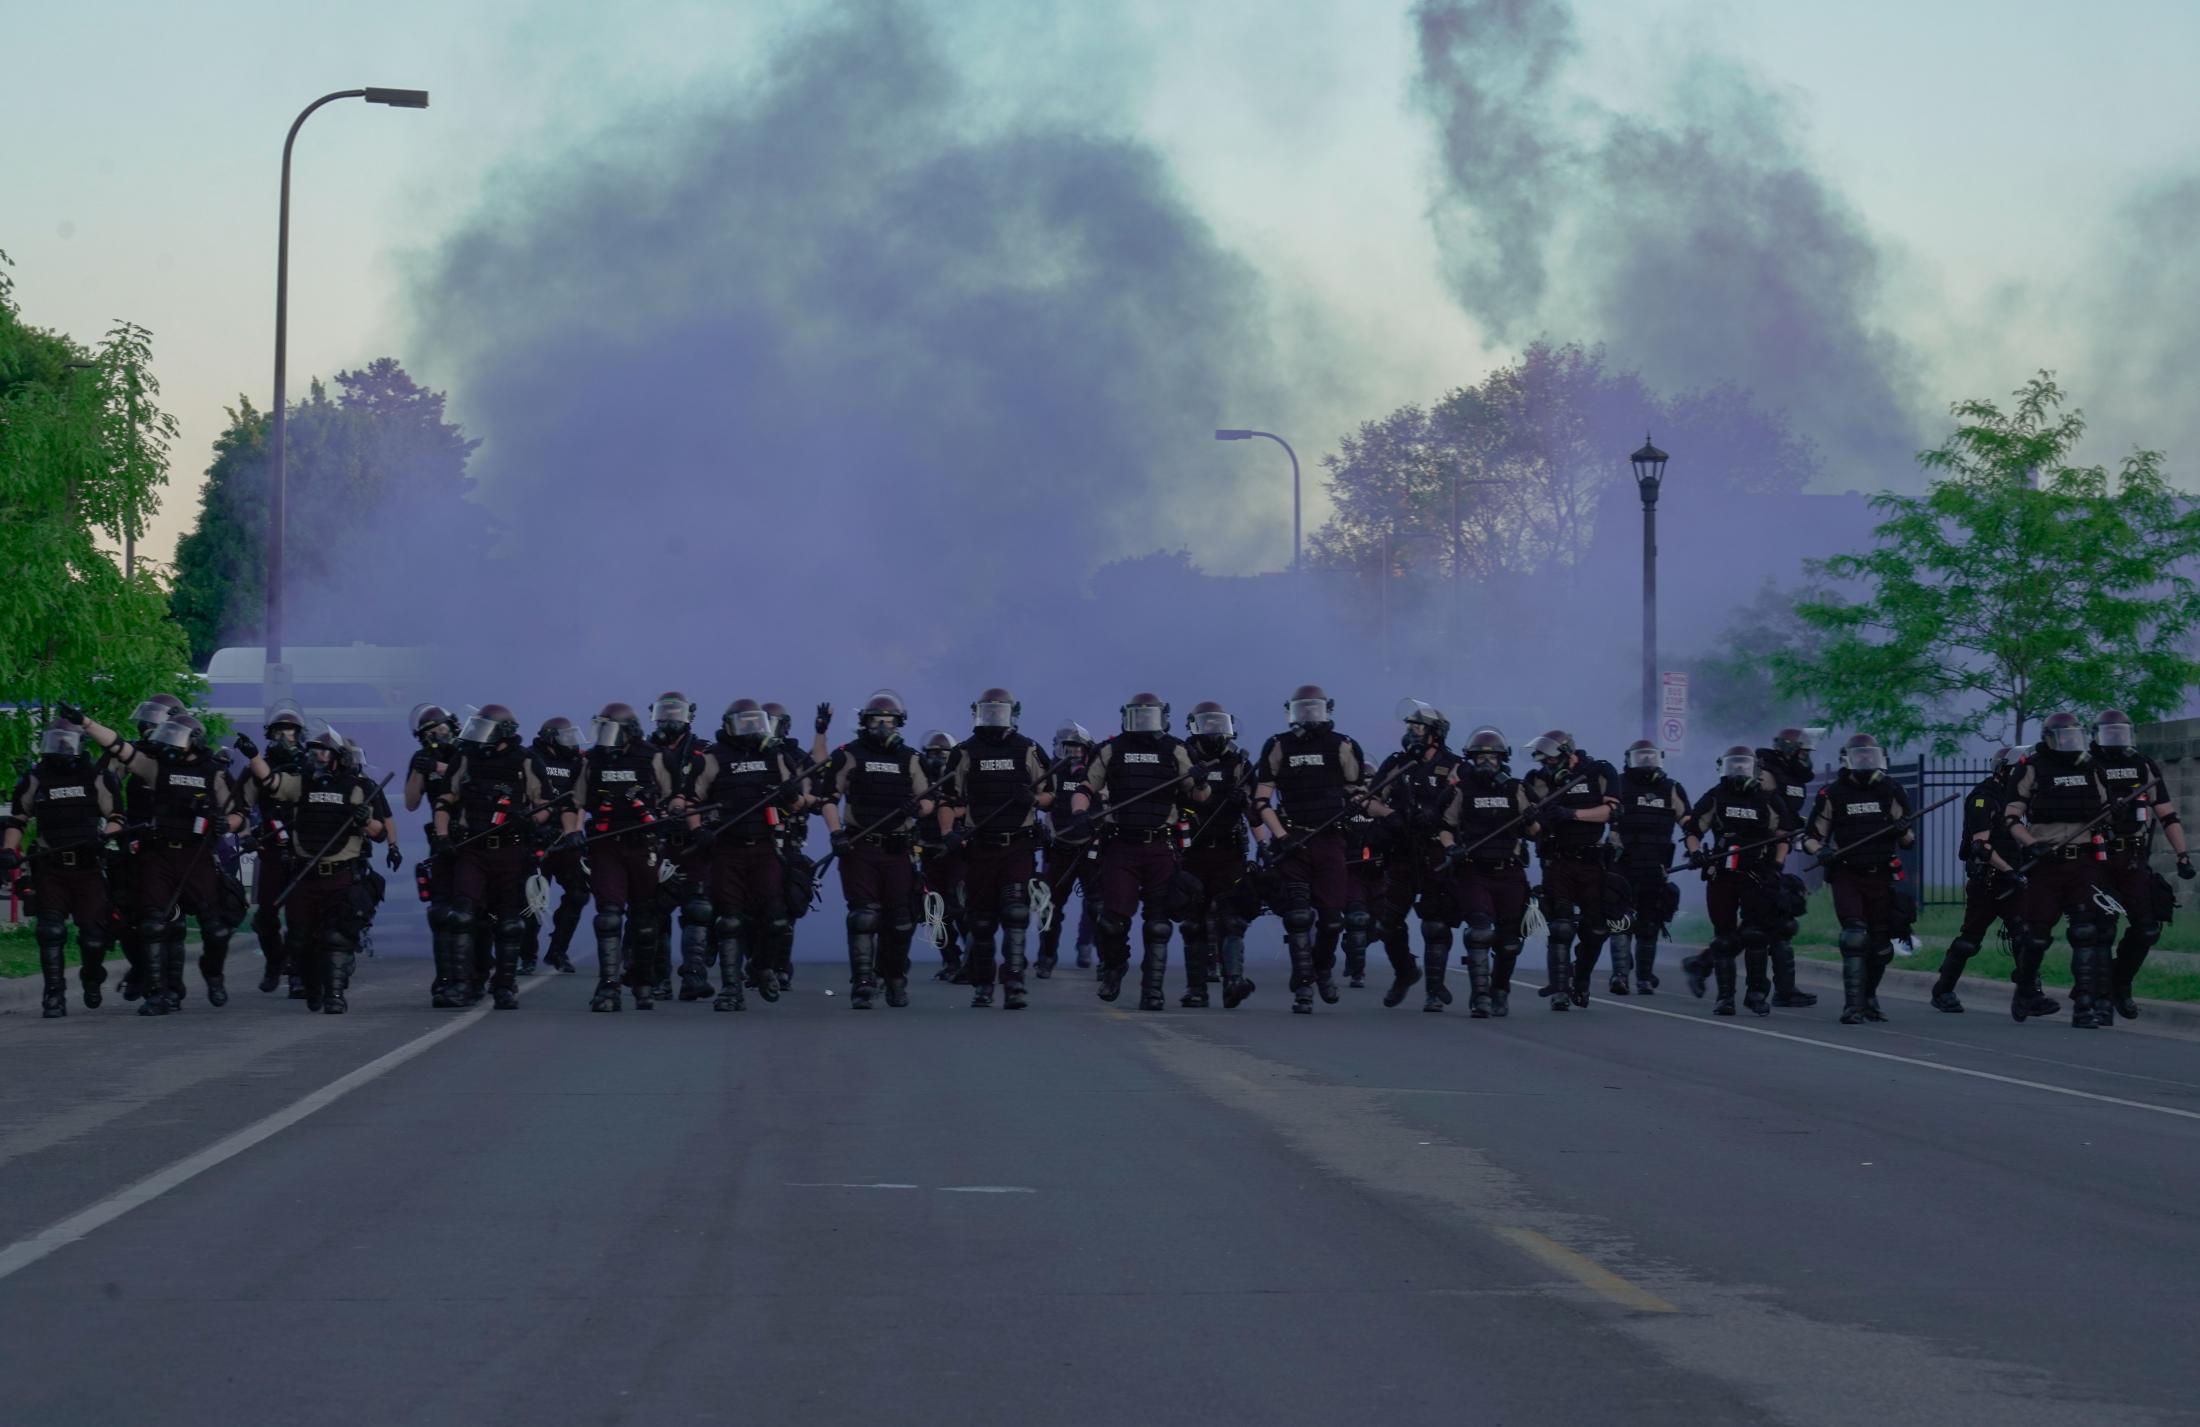 The BLM Summer - Minneapolis riot police walk through a cloud of purple...